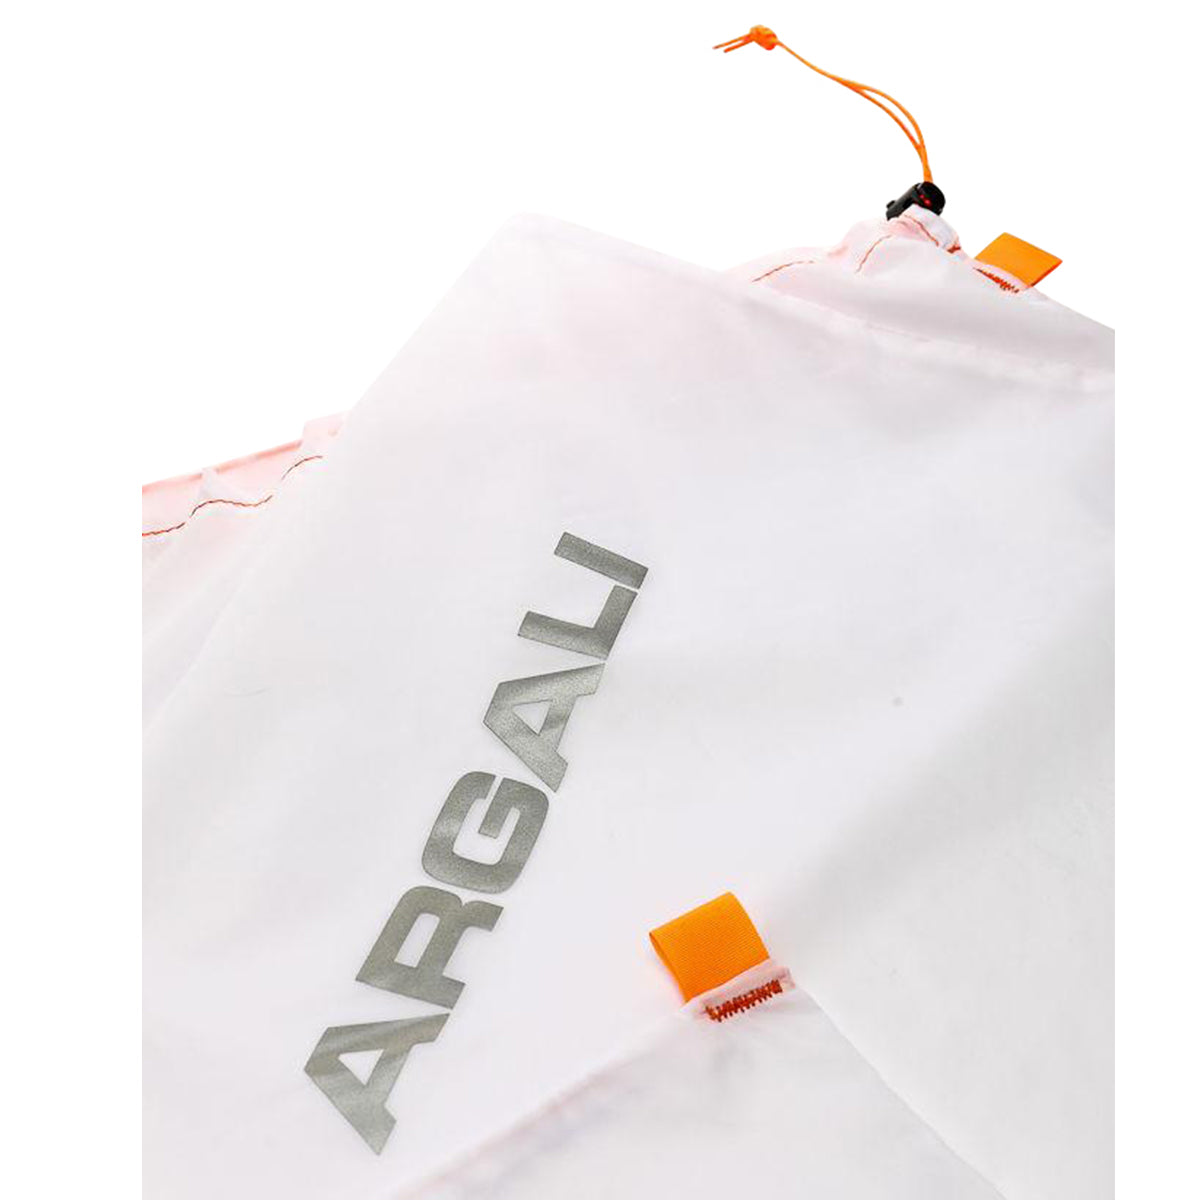 Argali High Country Pack Ultralight Game Bag Set by Argali | Gear - goHUNT Shop